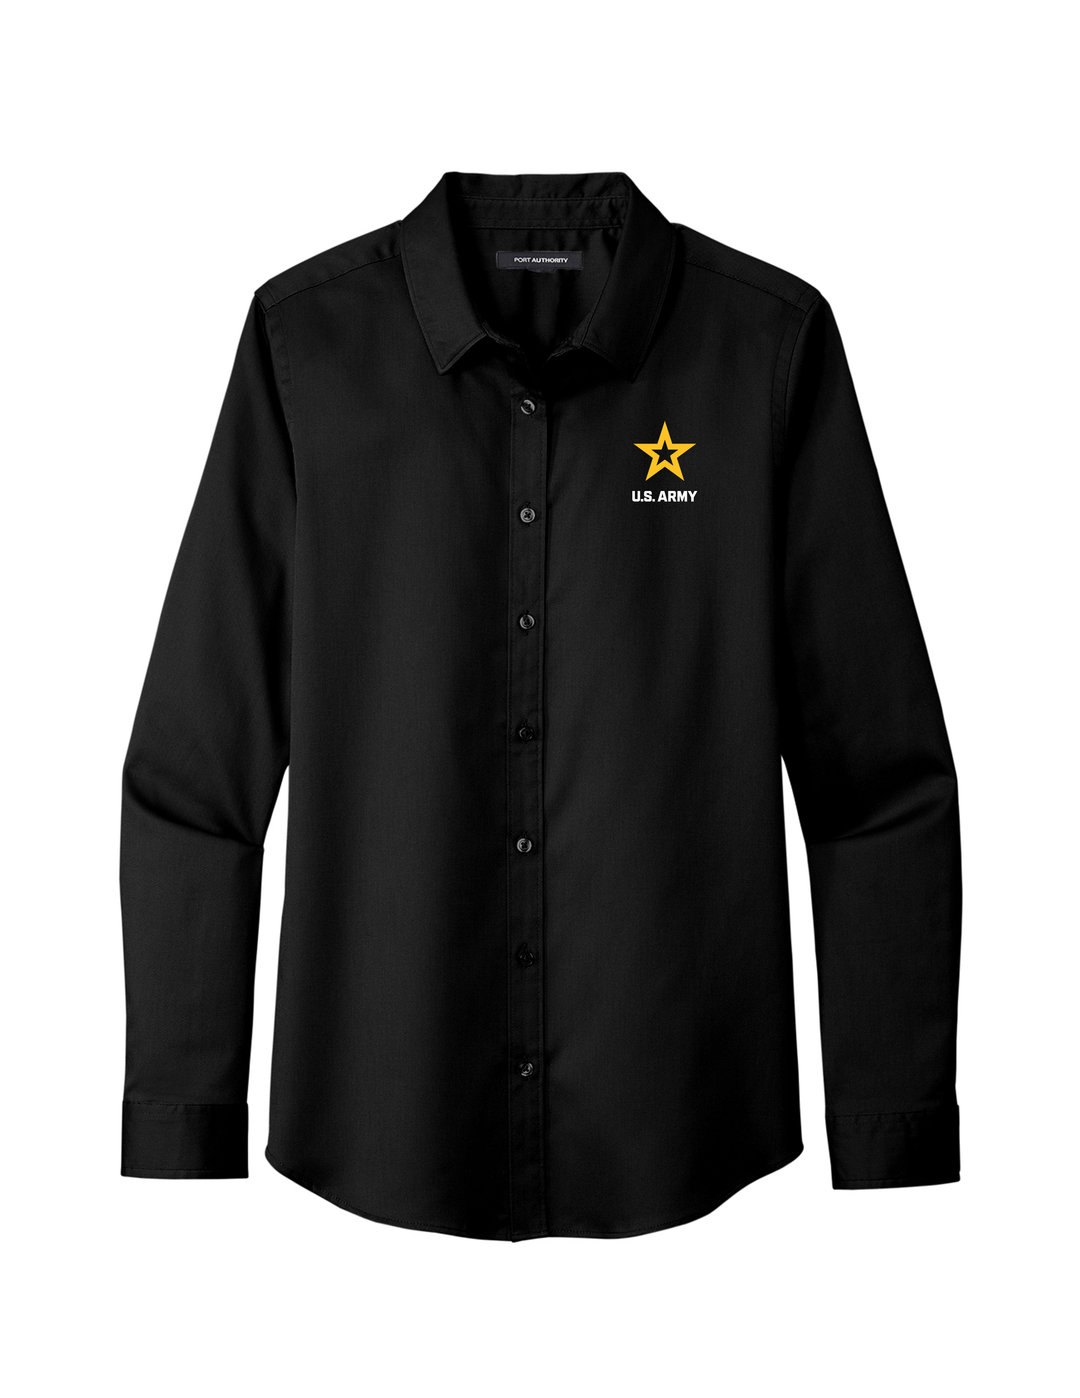 U.S. Army™ Button Up Shirt LADIES (Black)